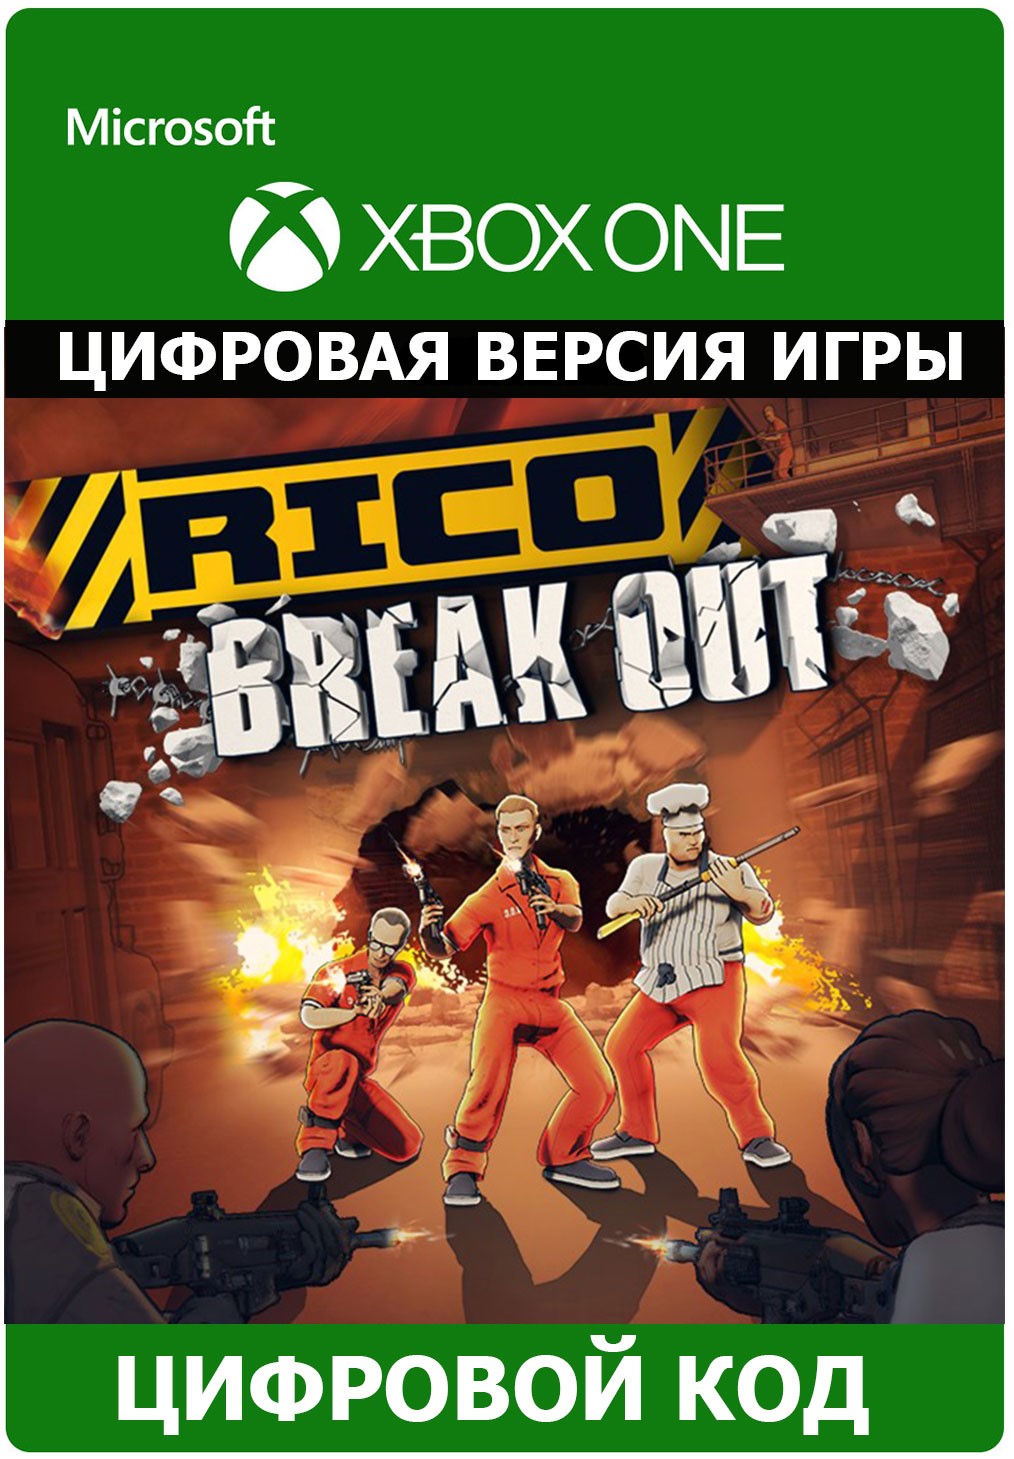 Купить Rico - Breakout Bundle XBOX ONE ключ